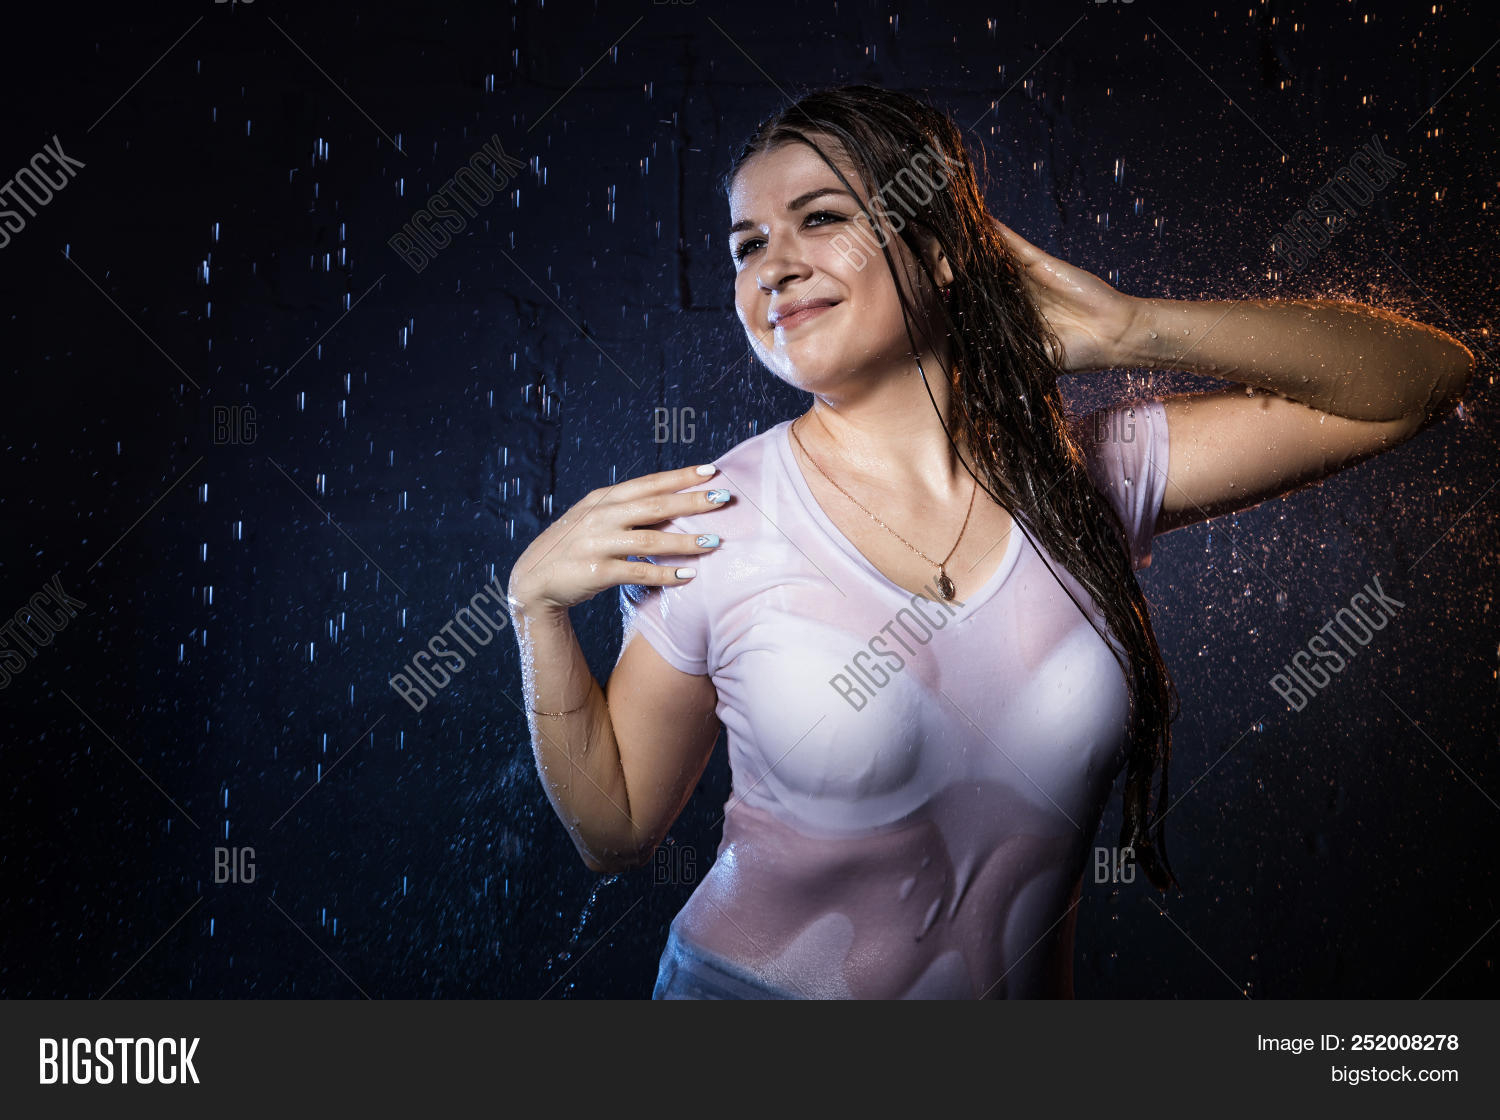 anita da silva recommends wet woman in white shirt photos pic